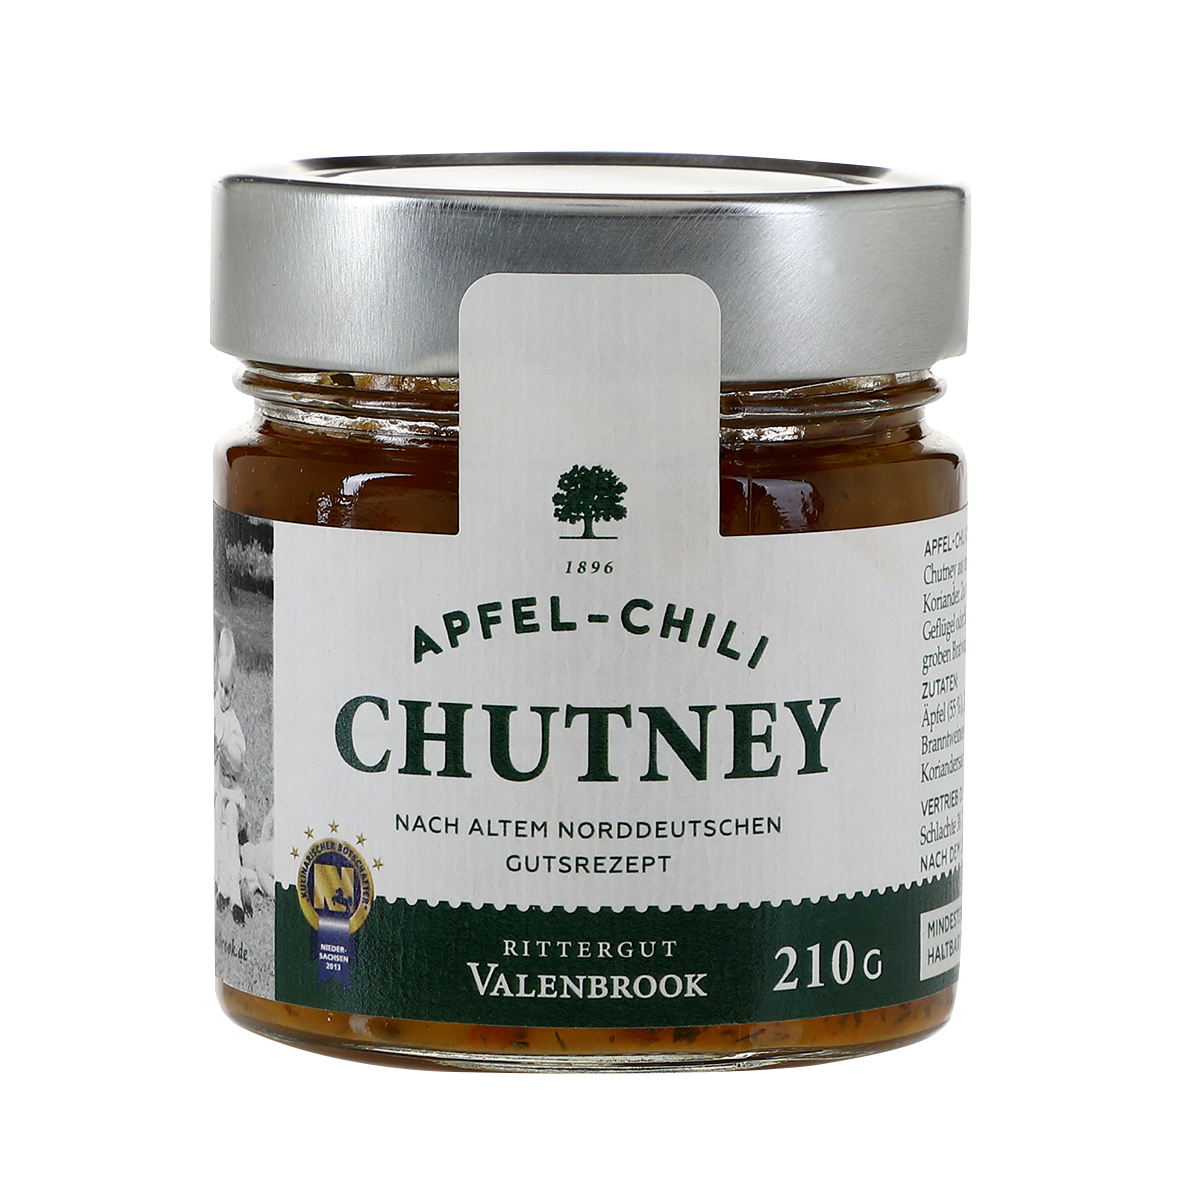 Apfel-Chili Chutney